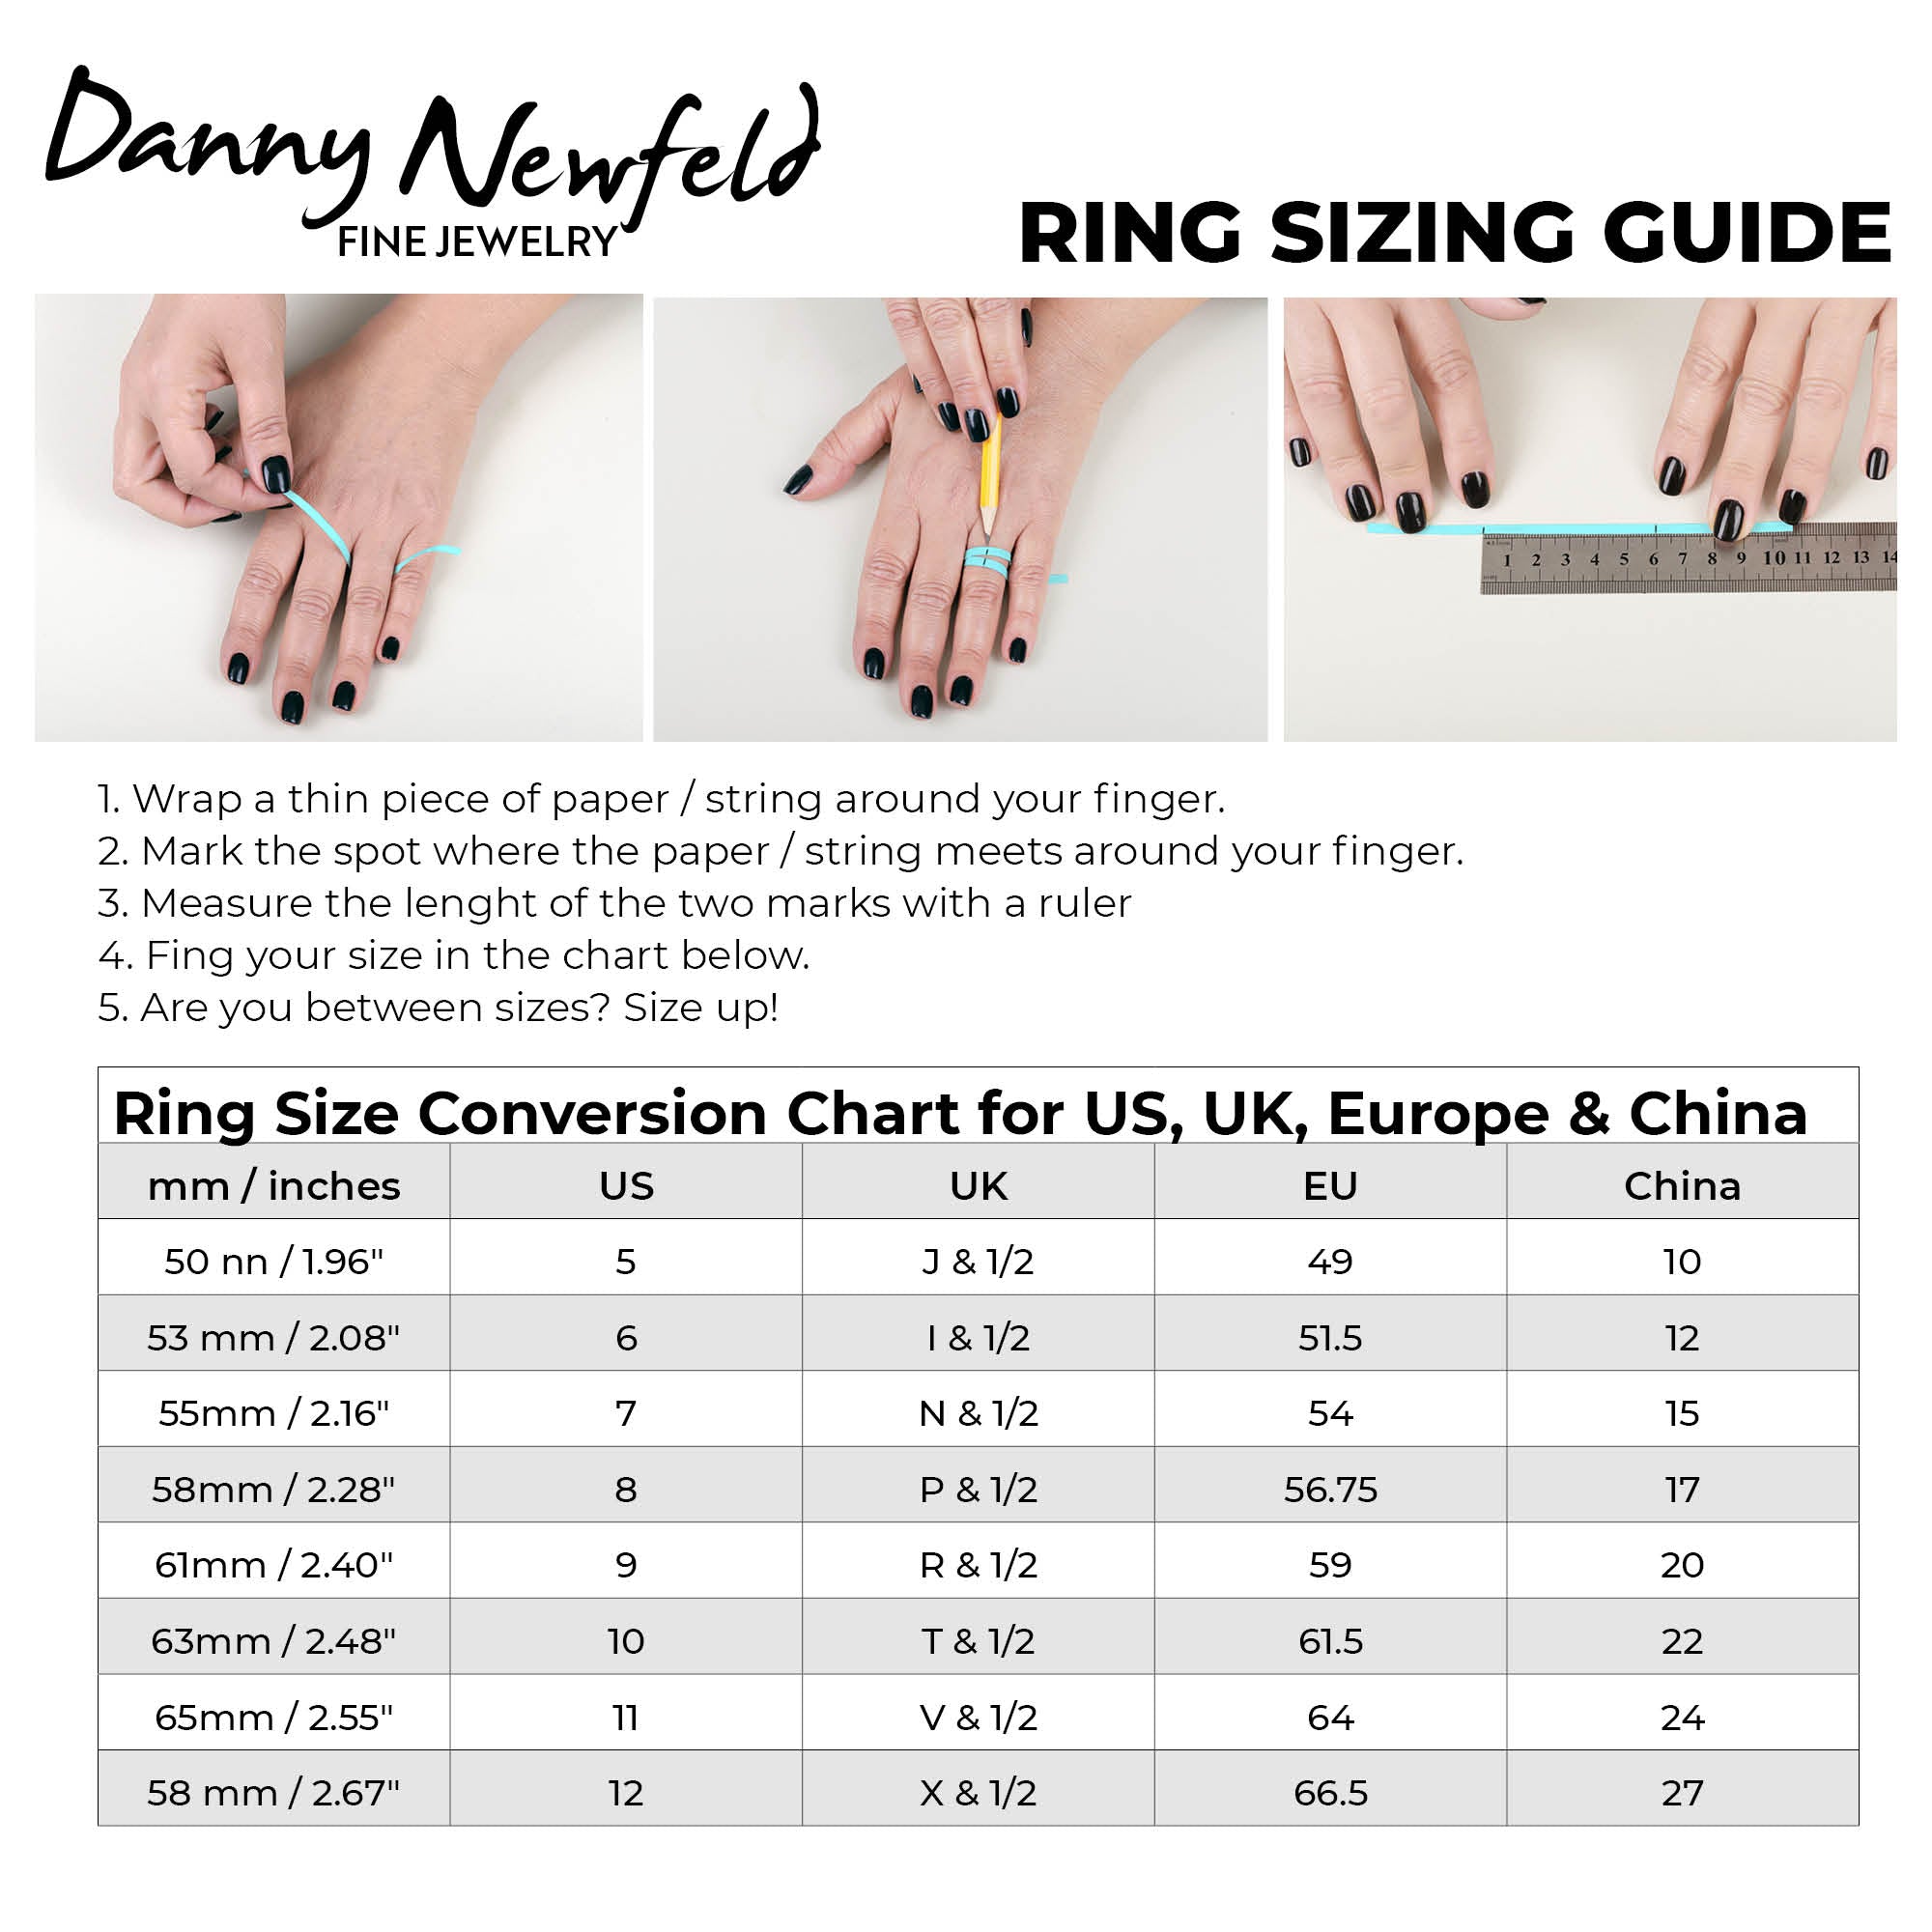 How Can I Measure My Ring Size? – dannynewfeldjewelry